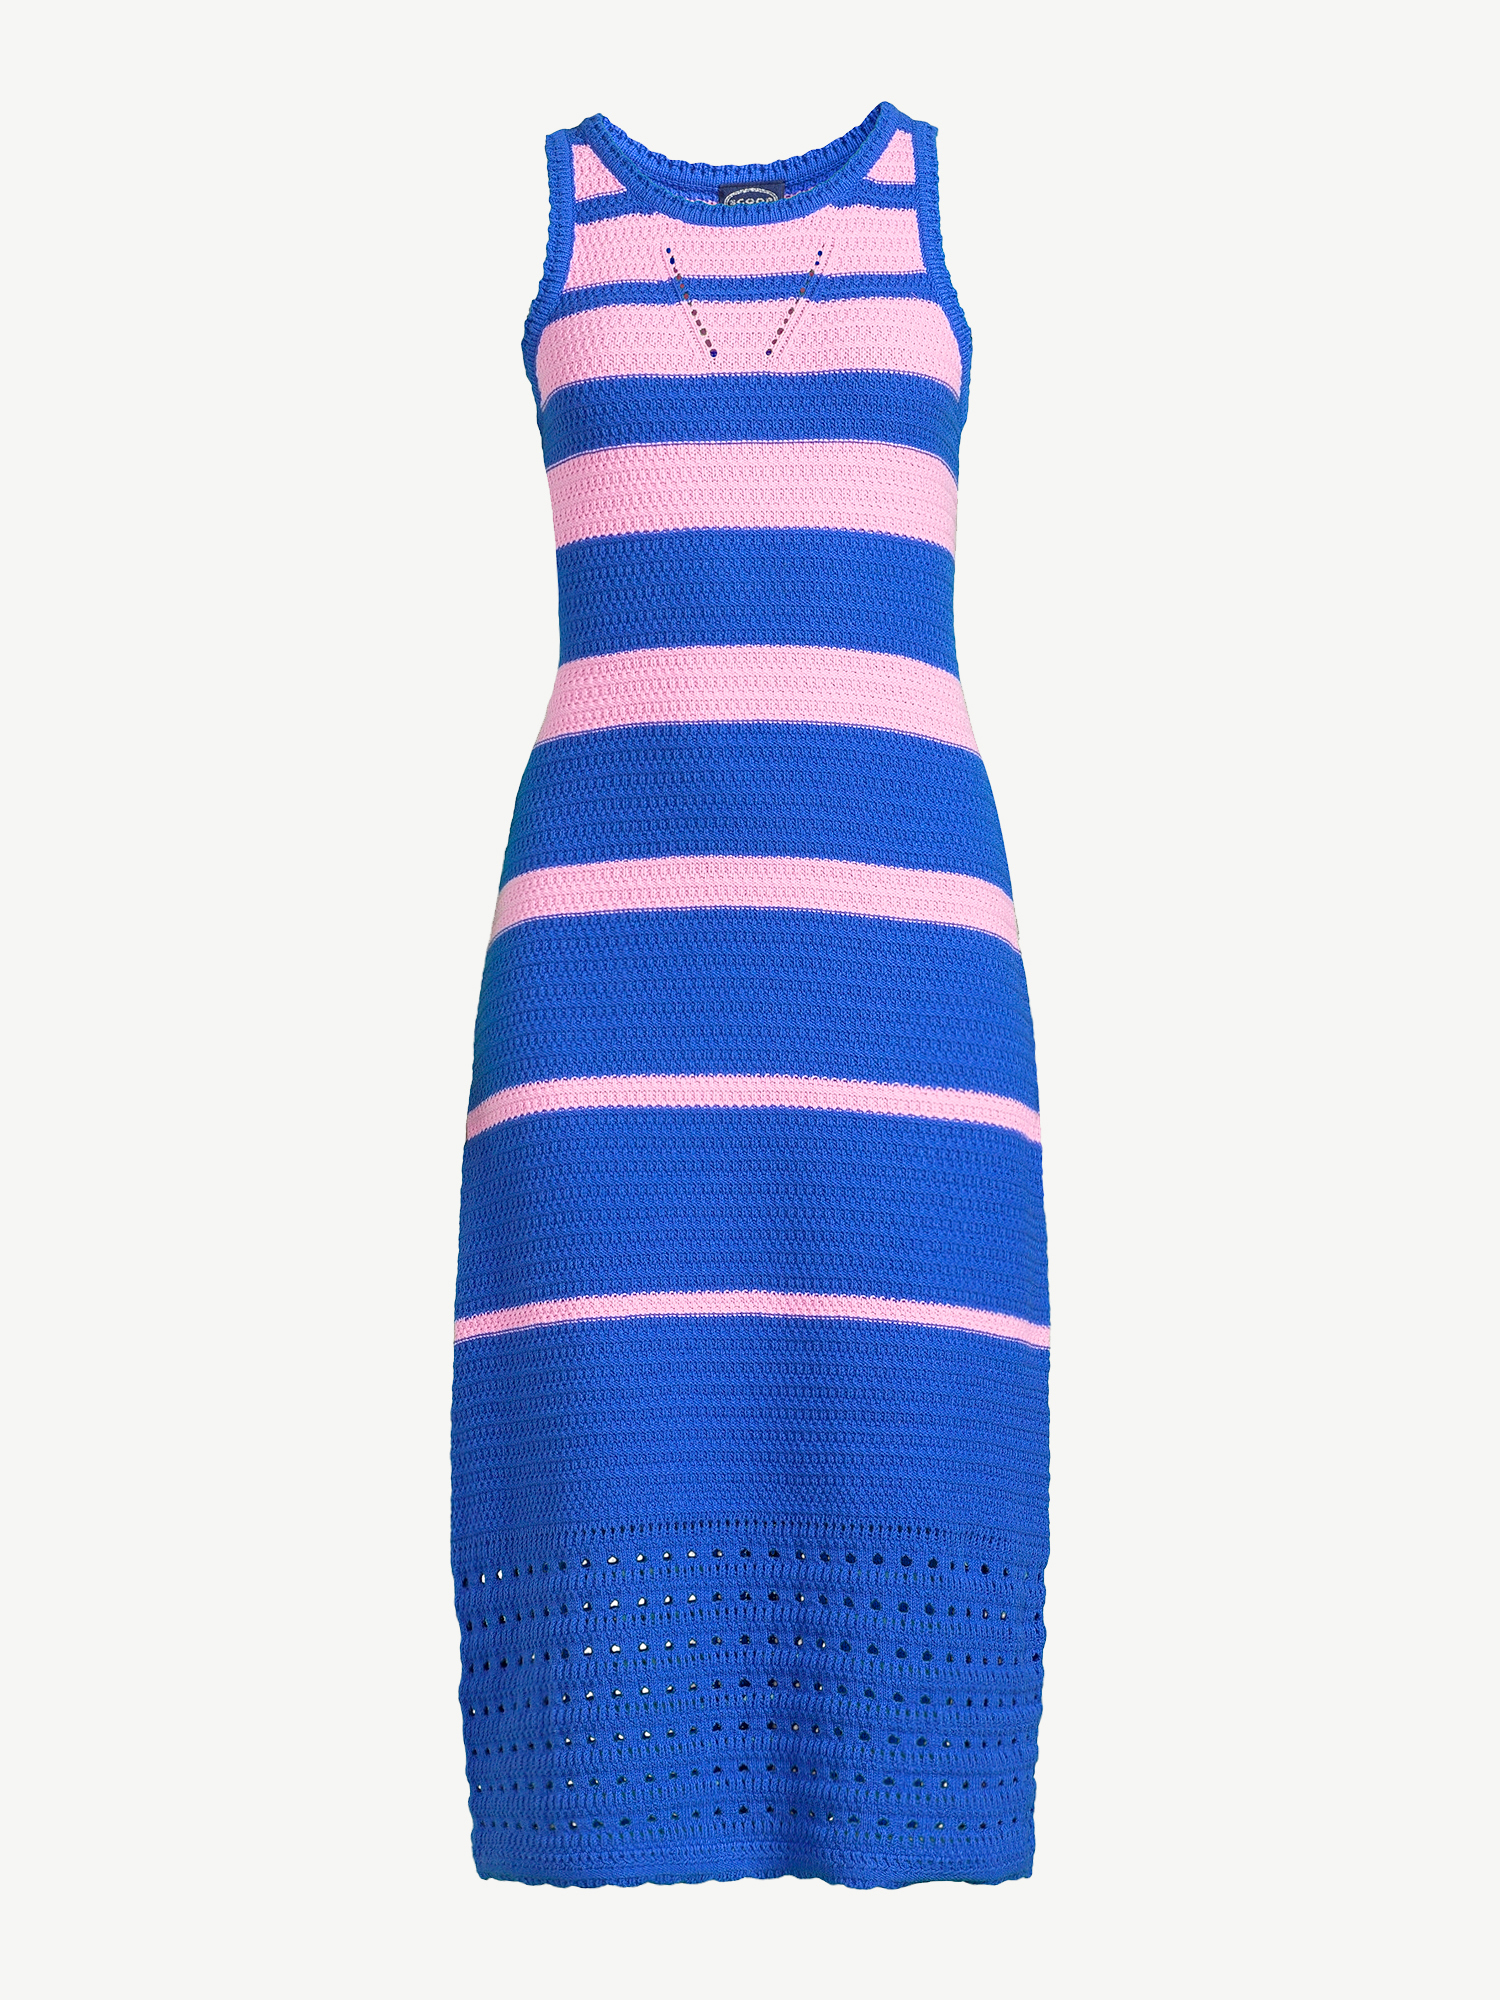 Scoop Women’s Striped Crochet Dress, Mid-Calf Length - image 5 of 5